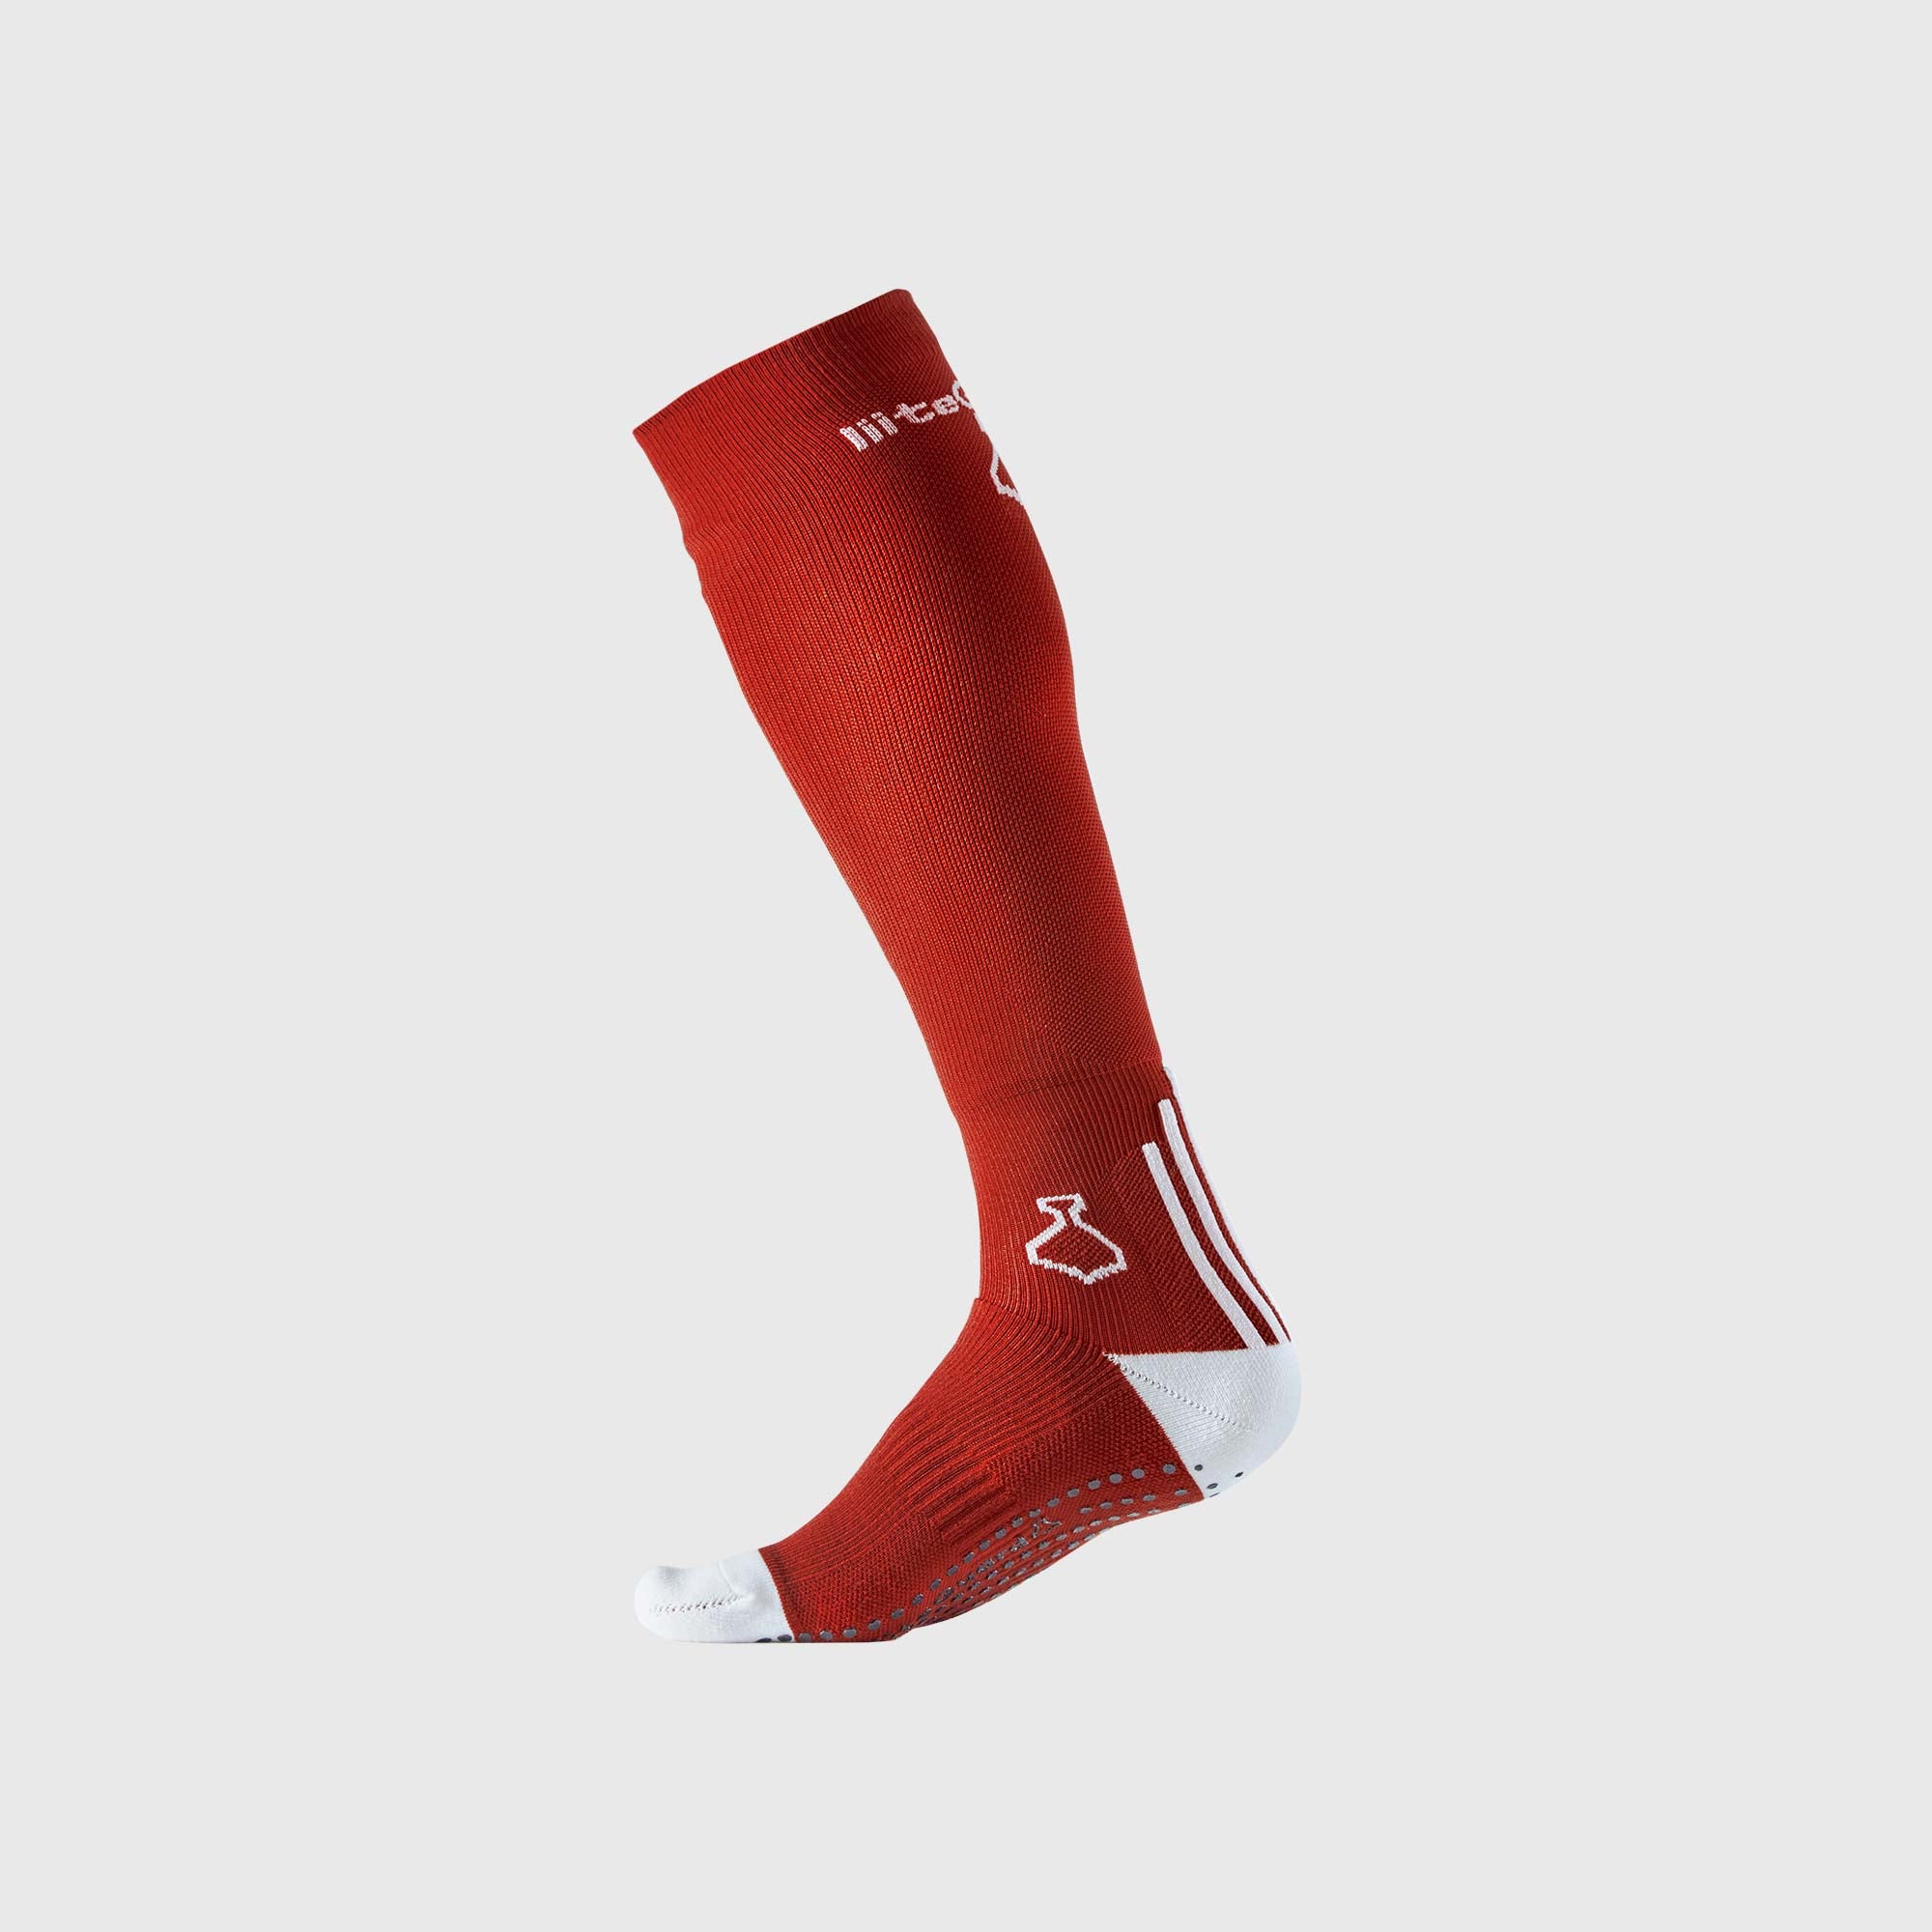 Liiteguard PERFORMANCE SOCK Long socks RED